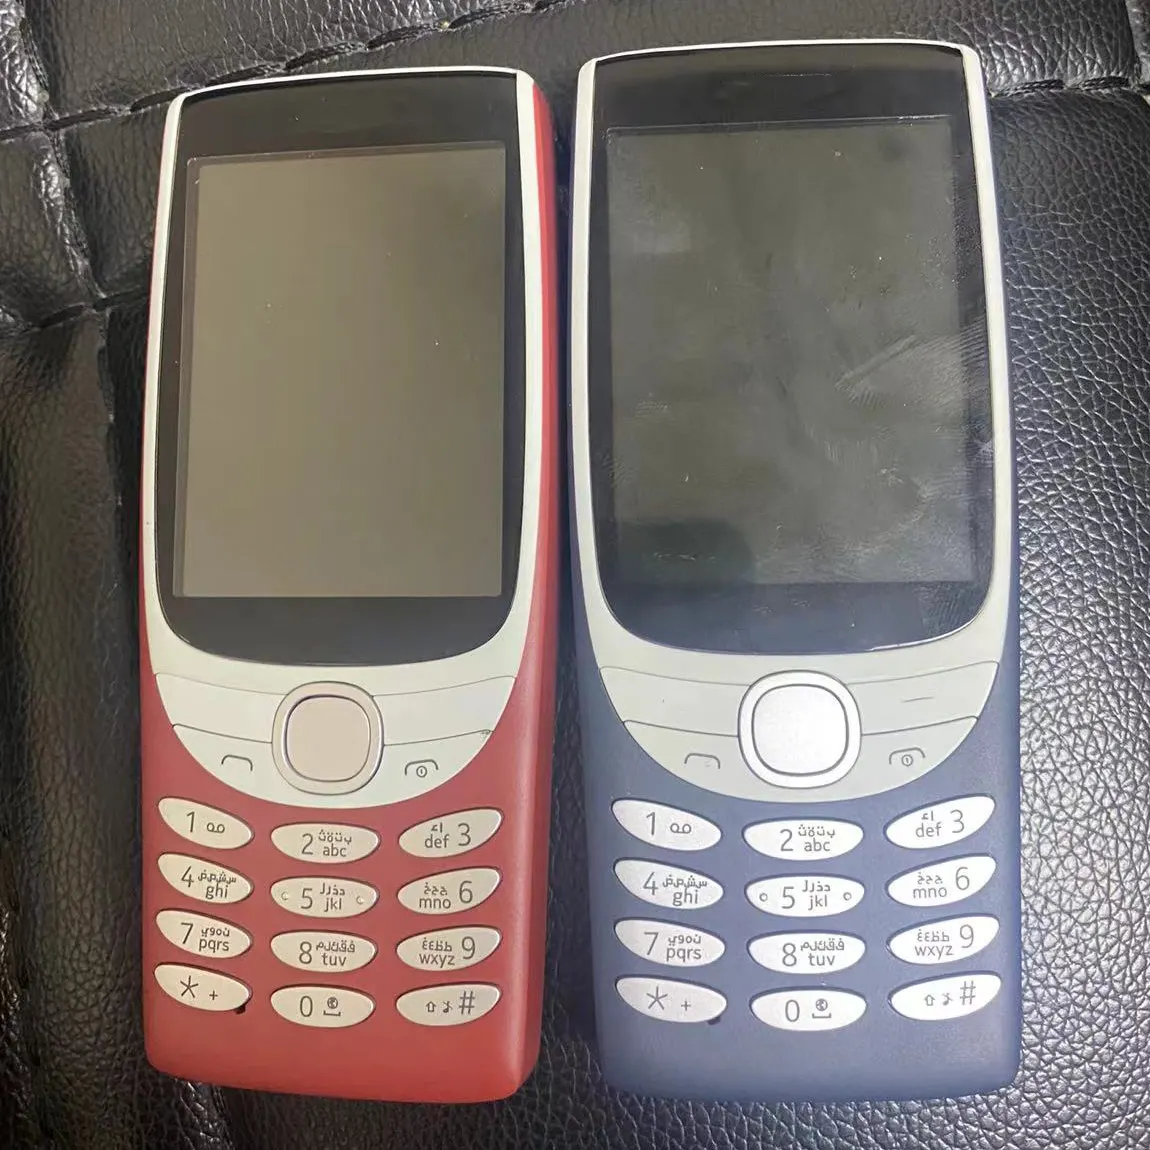 OEM חדש עיצוב נייד טלפונים תכונה טלפון 8210 2G עם אלחוטי אוזניות רשת נייד תכונה טלפון עבור Nokia 8210